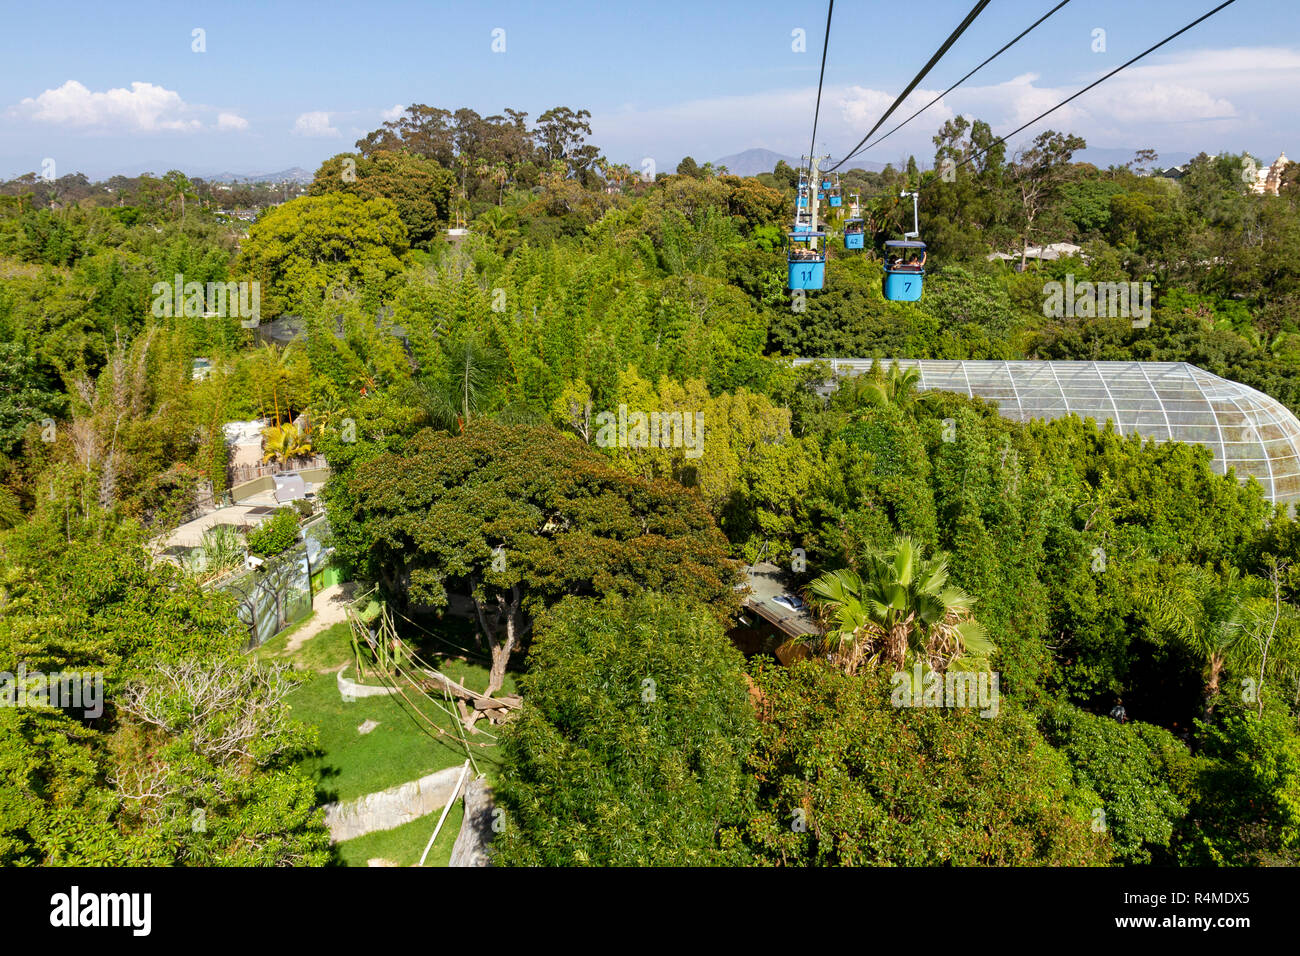 The Skyfari aerial tram/cable car, San Diego Zoo, Balboa Park, California, United States. Stock Photo